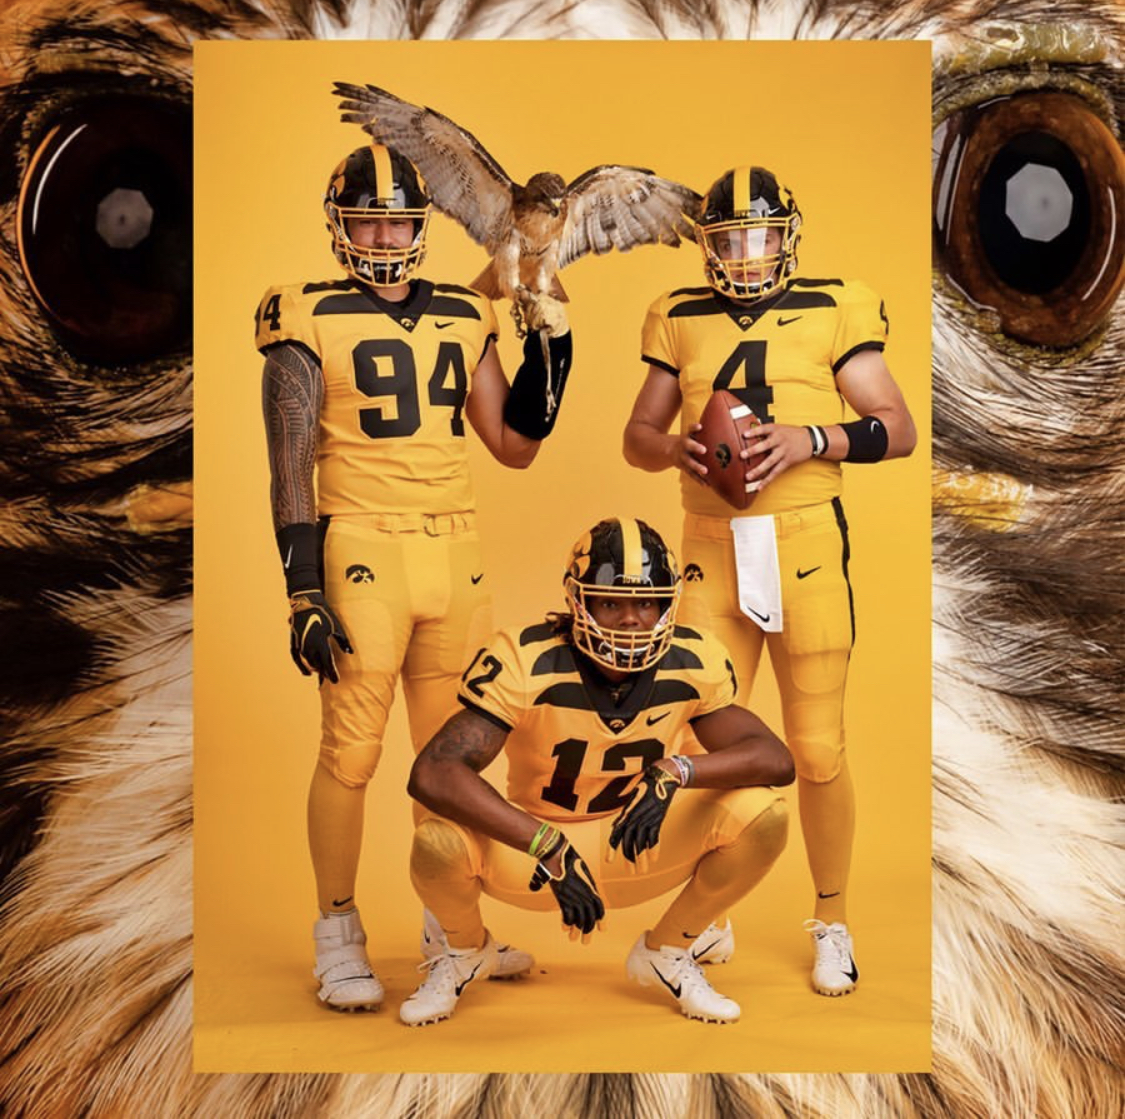 Hawkeyes uniforms: Iowa football team wears special gold 'winged